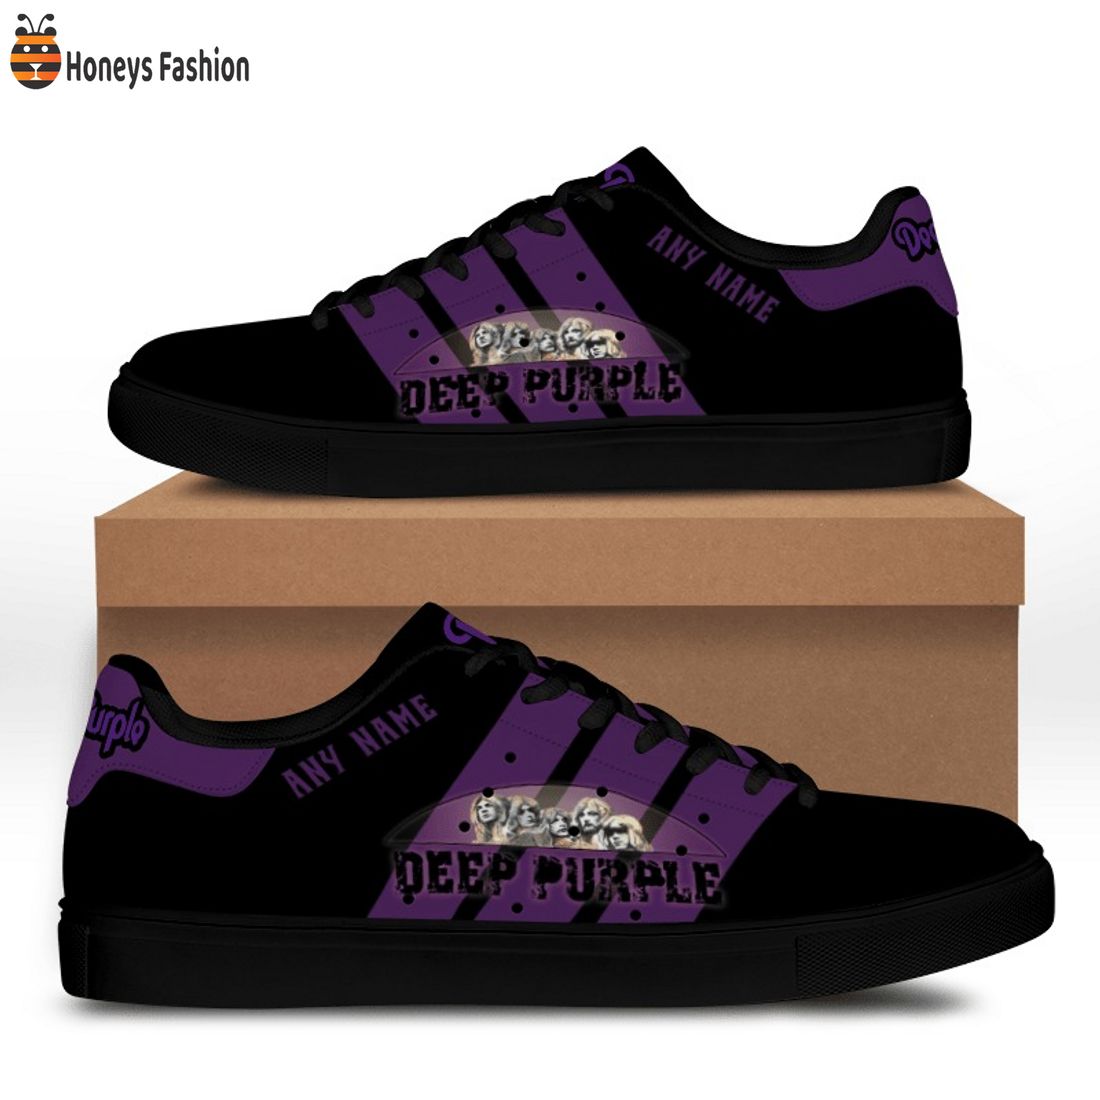 Deep Purple custom name ver 1 stan smith adidas shoes